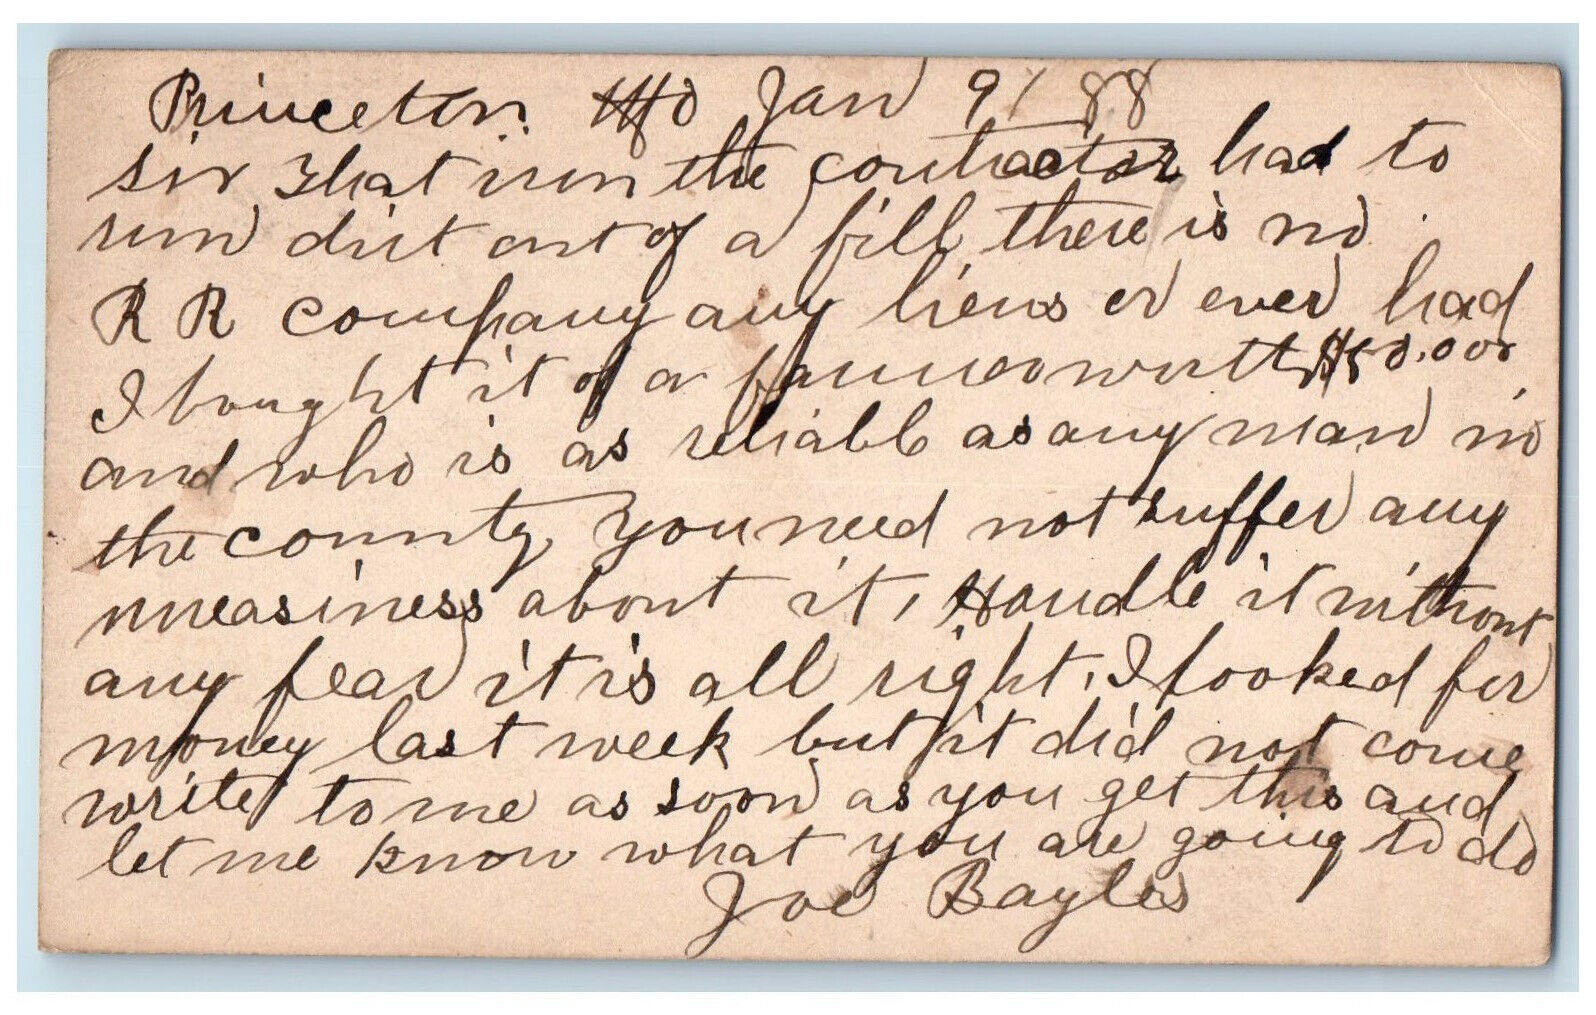 1888 RR Company Joe Bayles Princeton Missouri MO Posted Postal Card